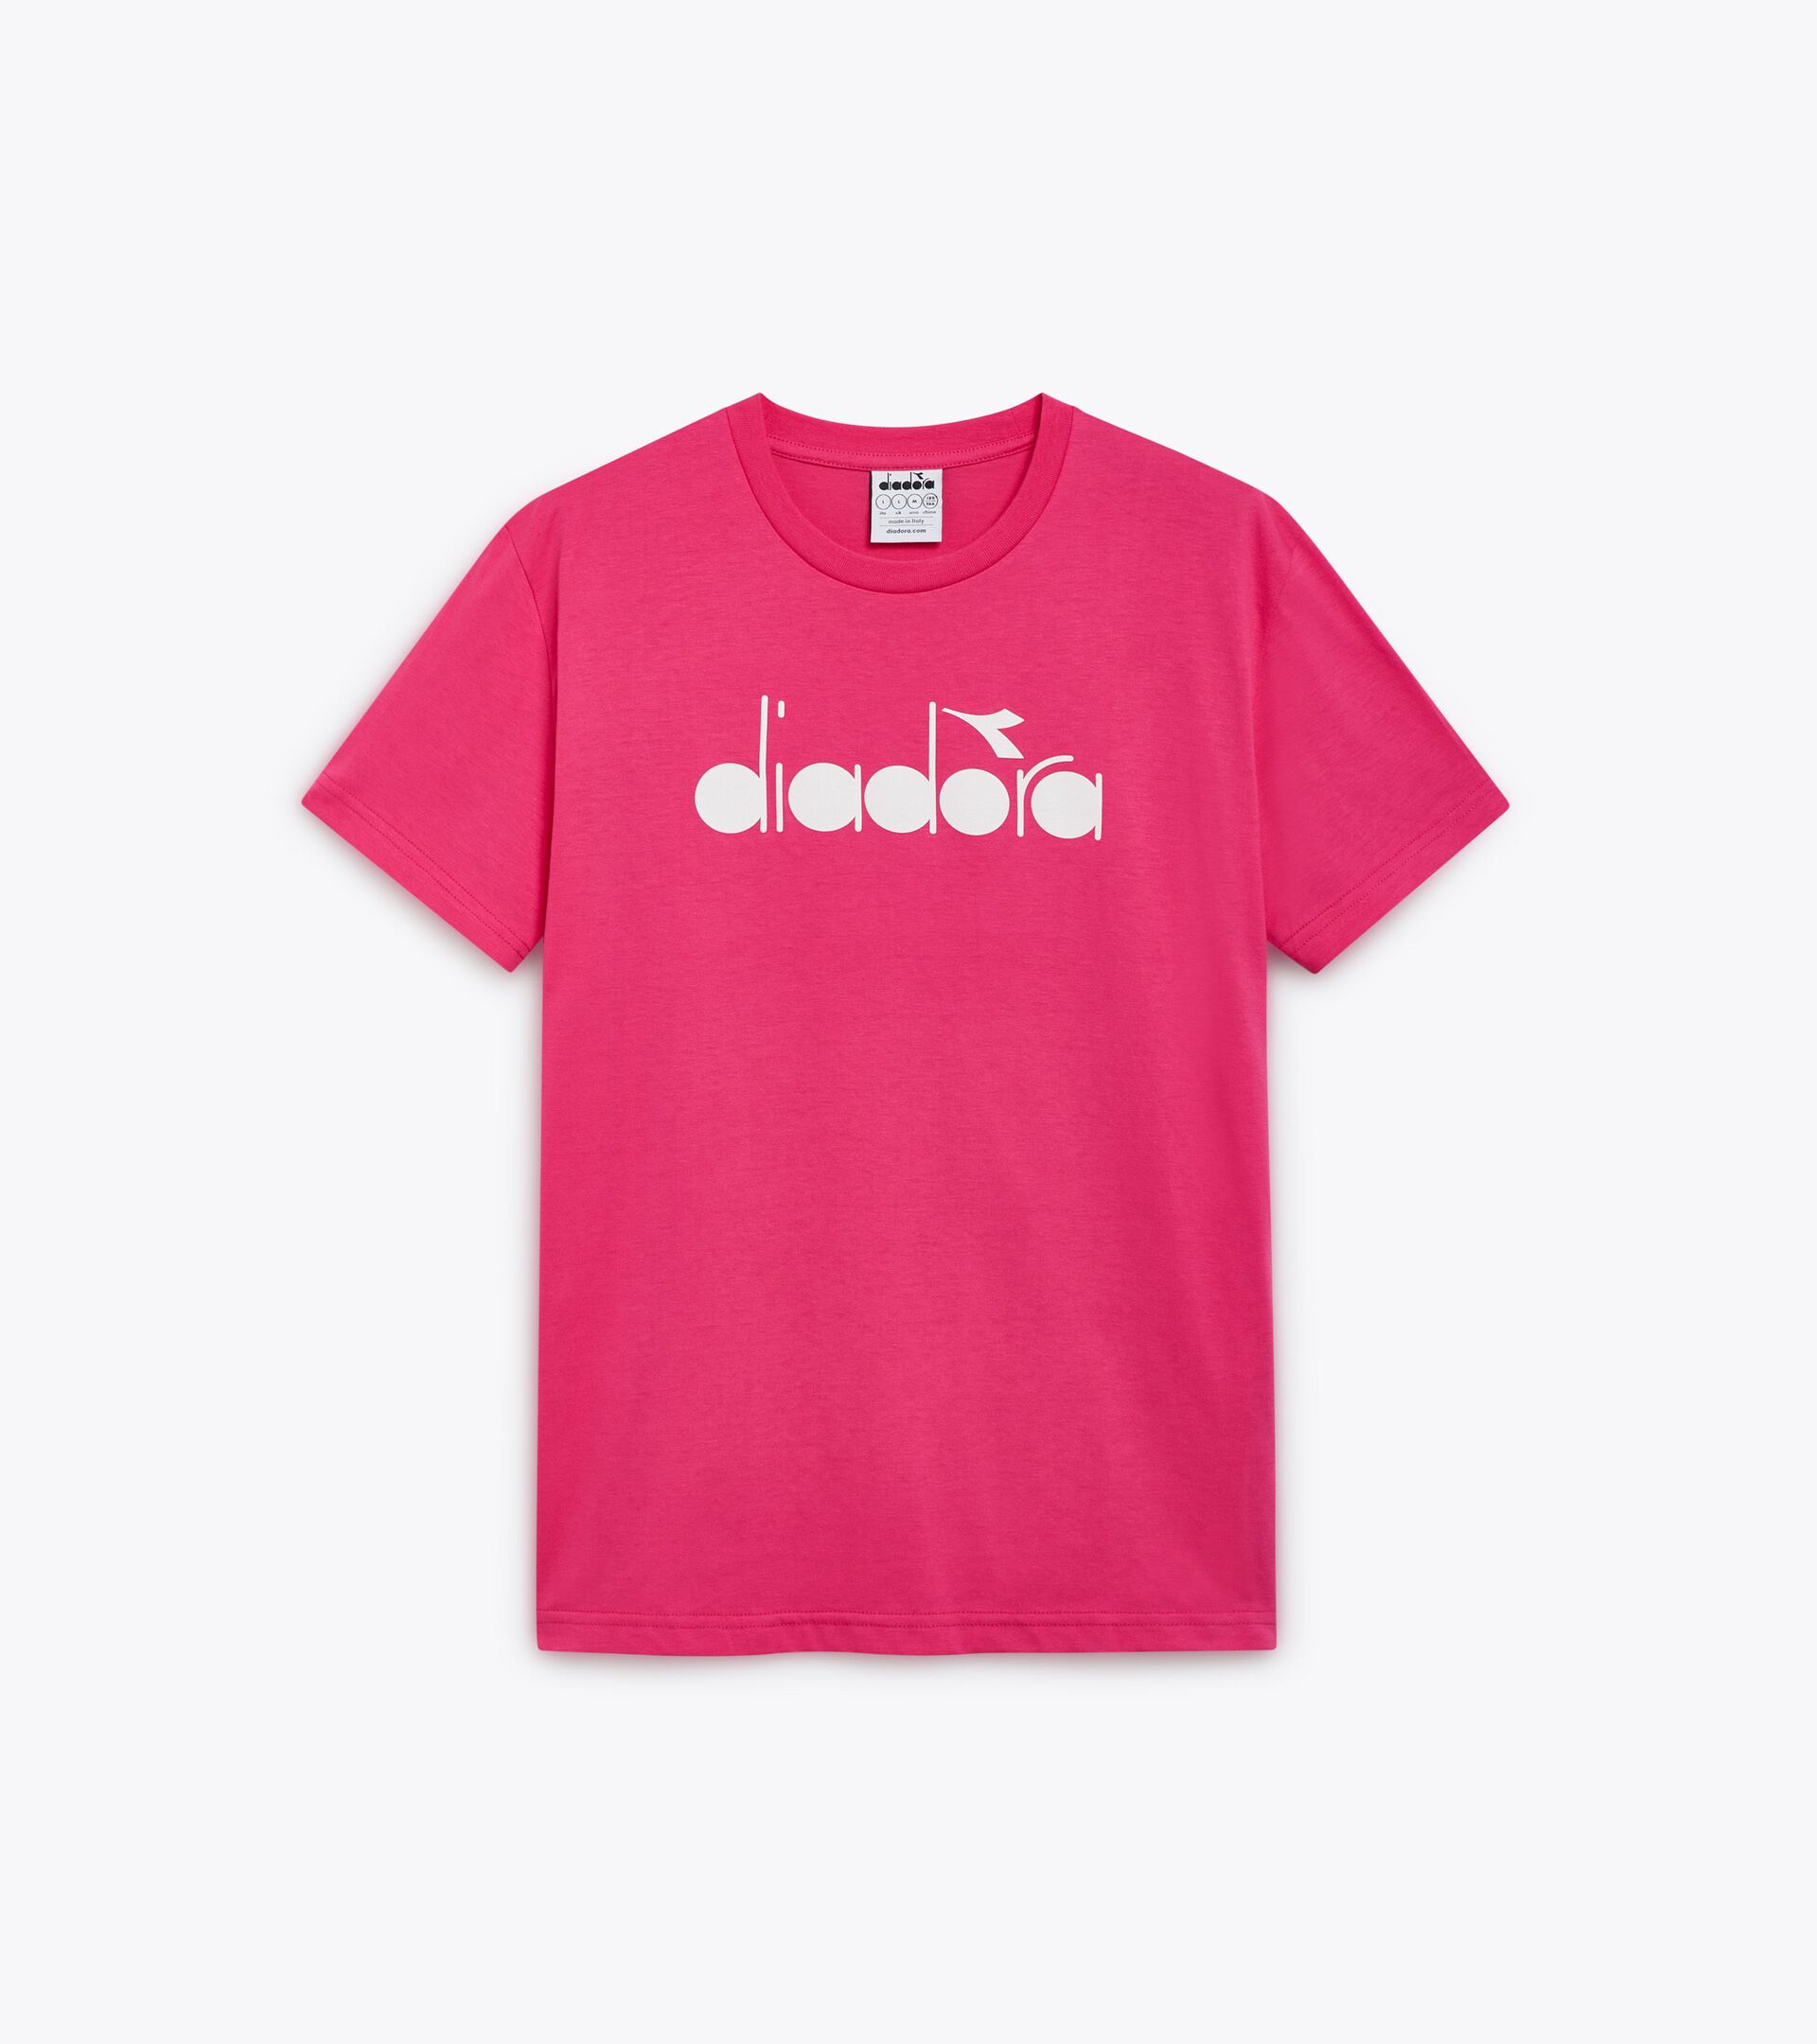 T-shirt - Made in Italy - Gender Neutral  T-SHIRT SS LOGO ROSA SORBETTO - Diadora